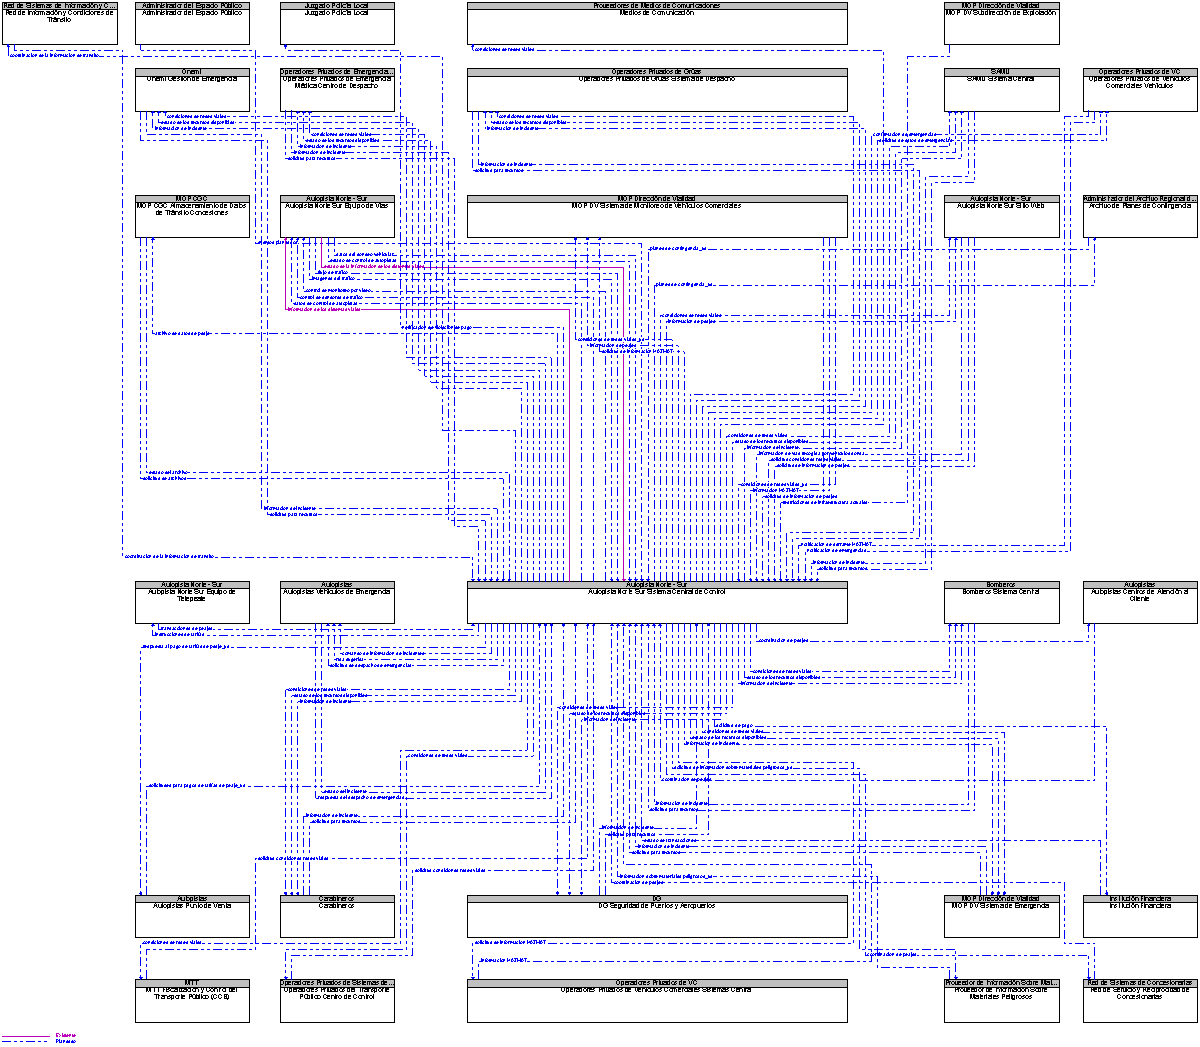 Diagrama Del Contexto por Autopista Norte Sur Sistema Central de Control